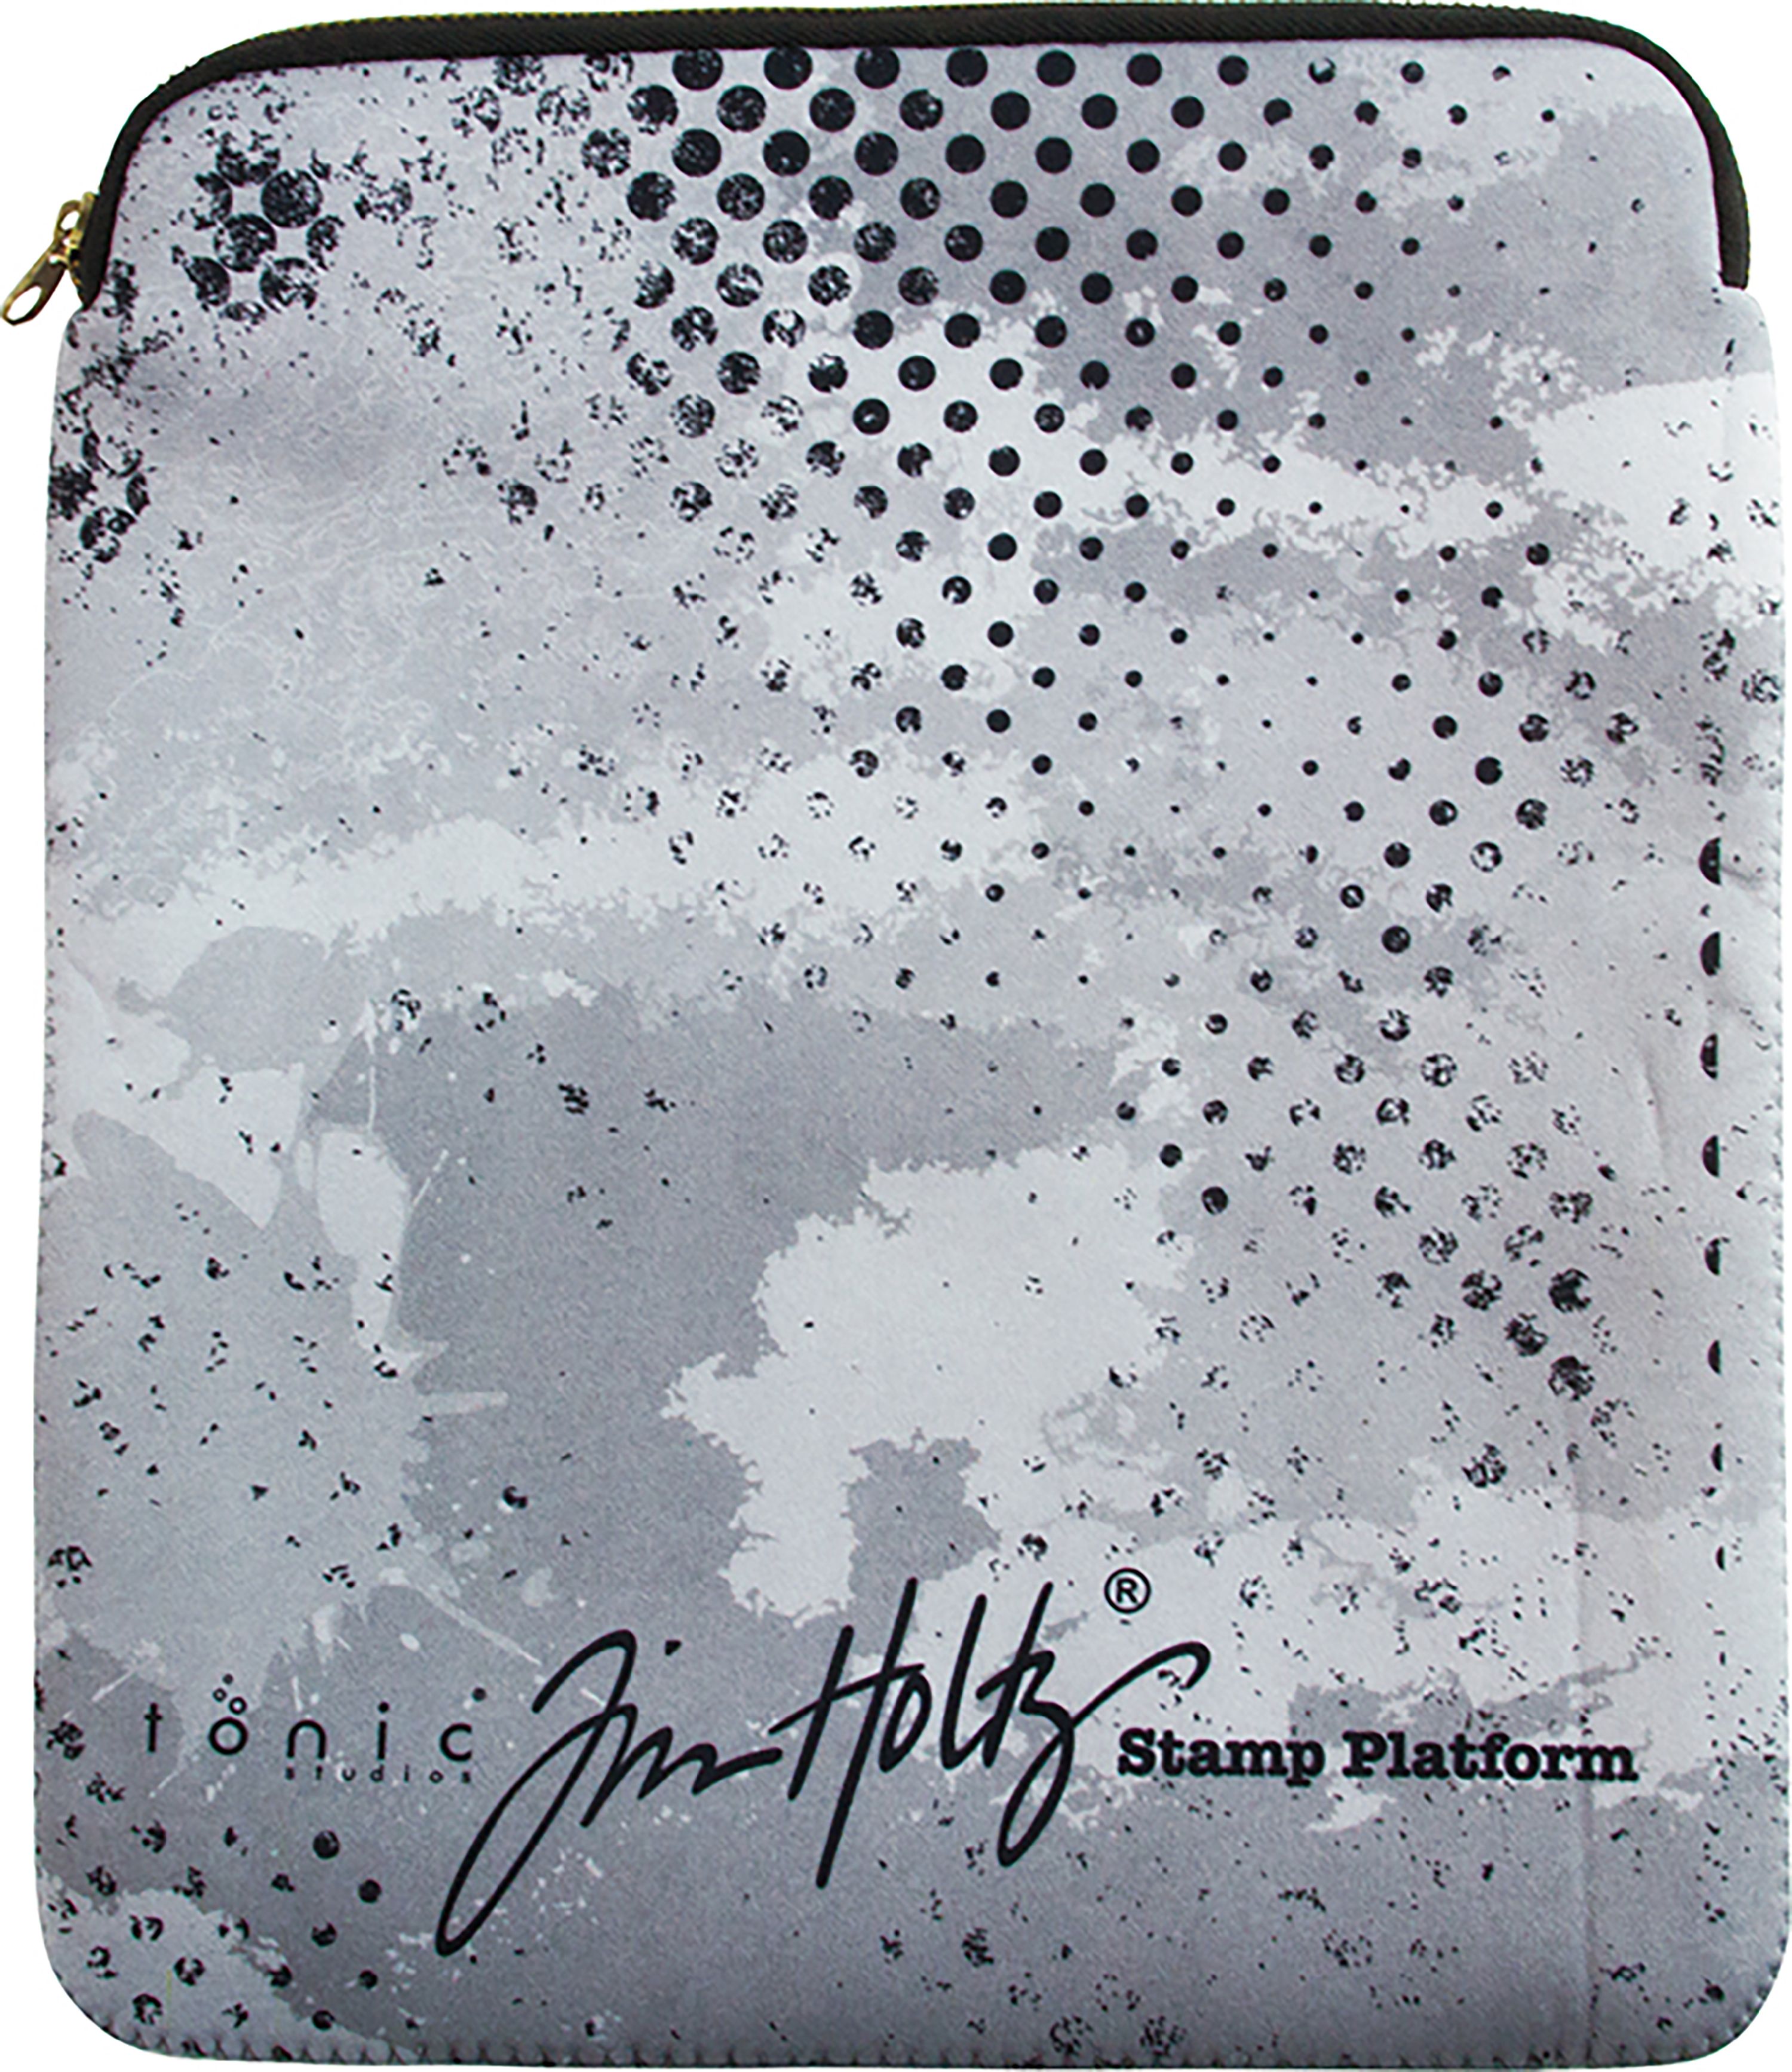 Tim Holtz Stamping Platform Zipper Sleeve